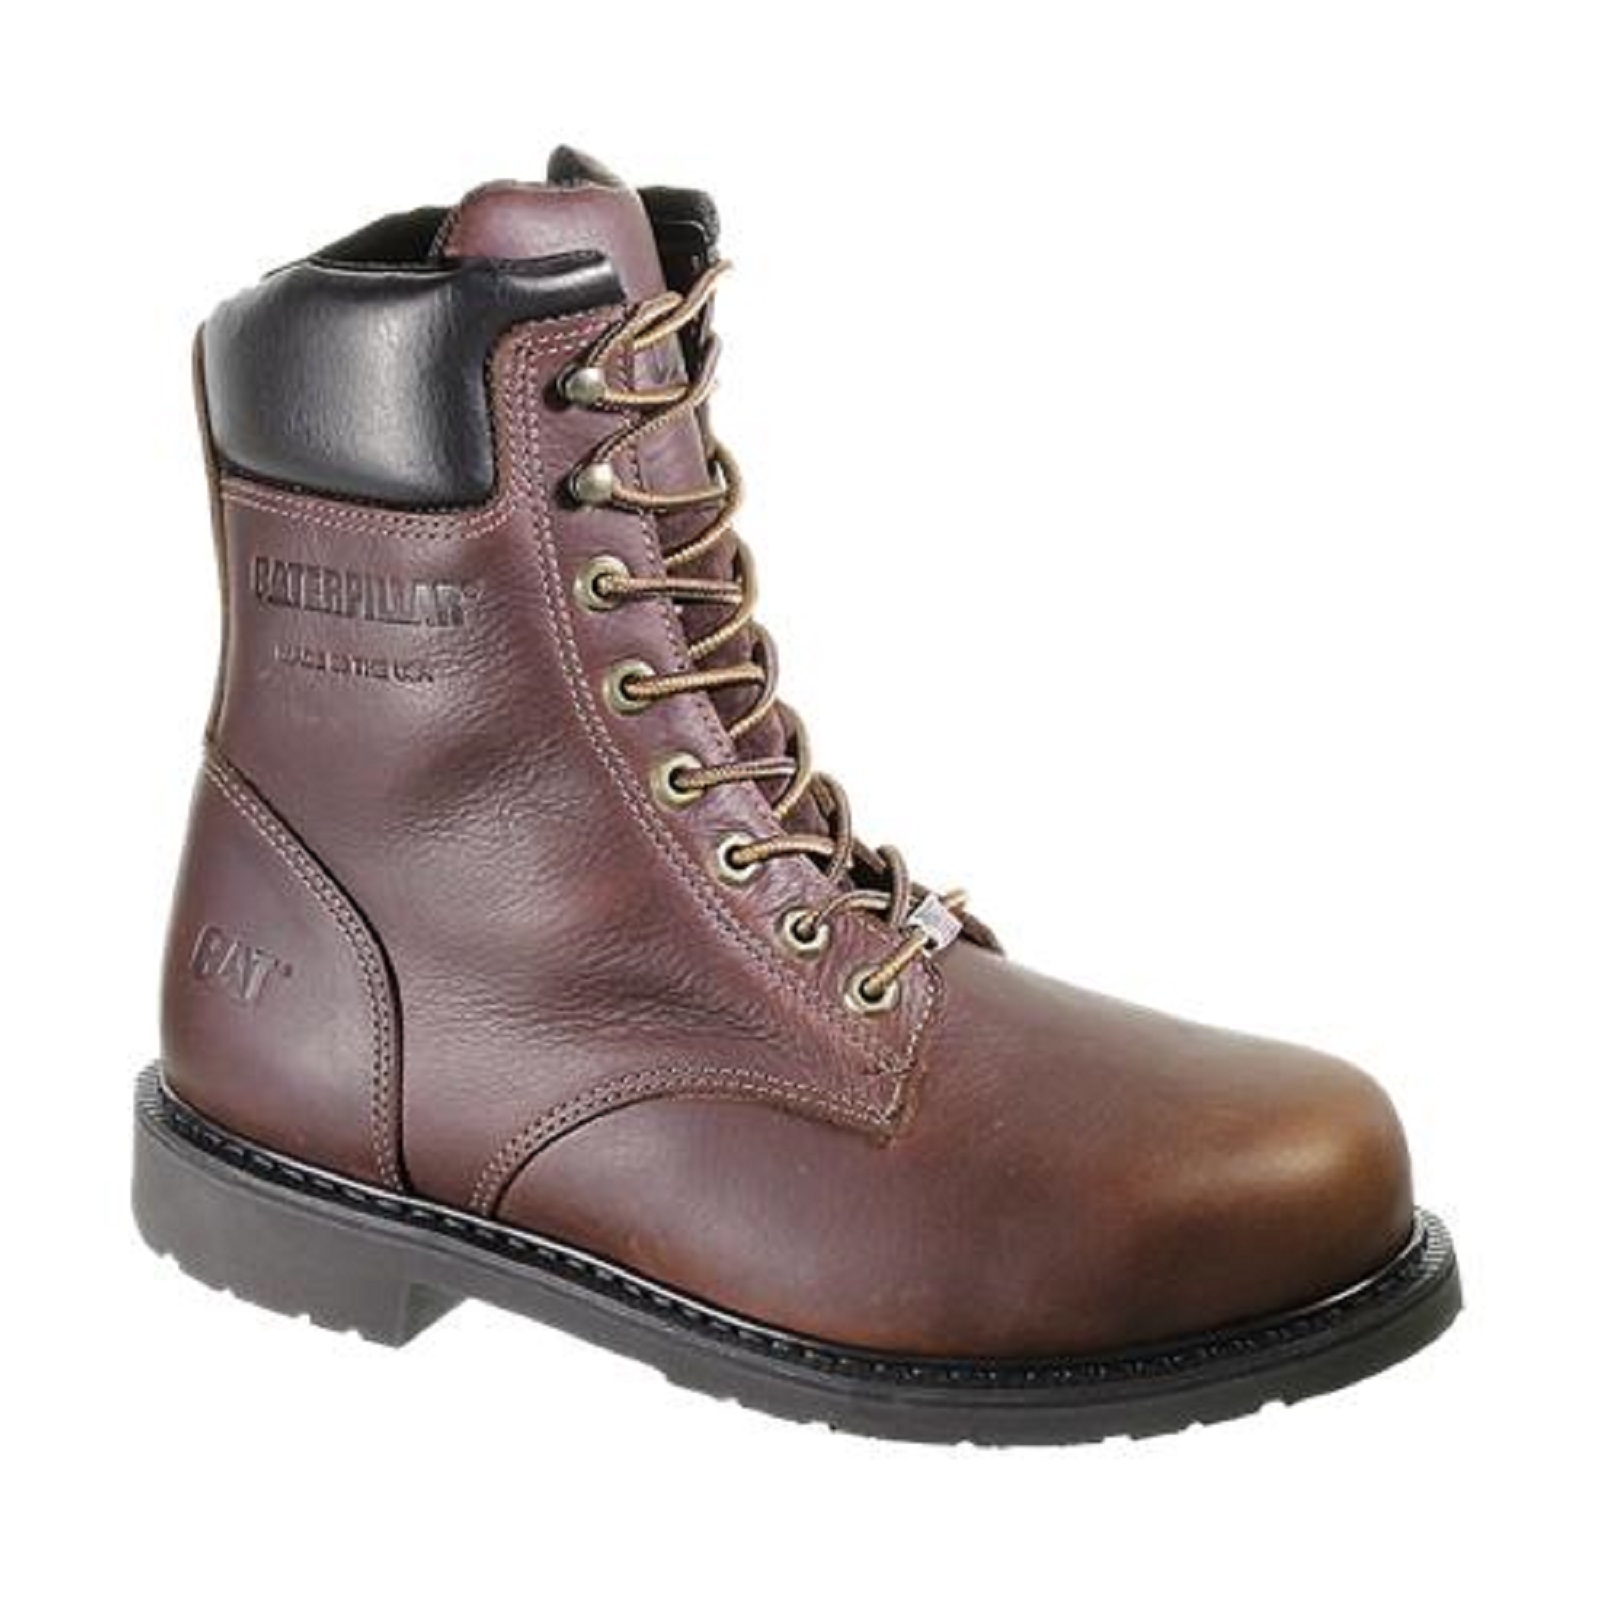 Cat Footwear Men's Liberty Brown Leather Steel Toe Work Boot